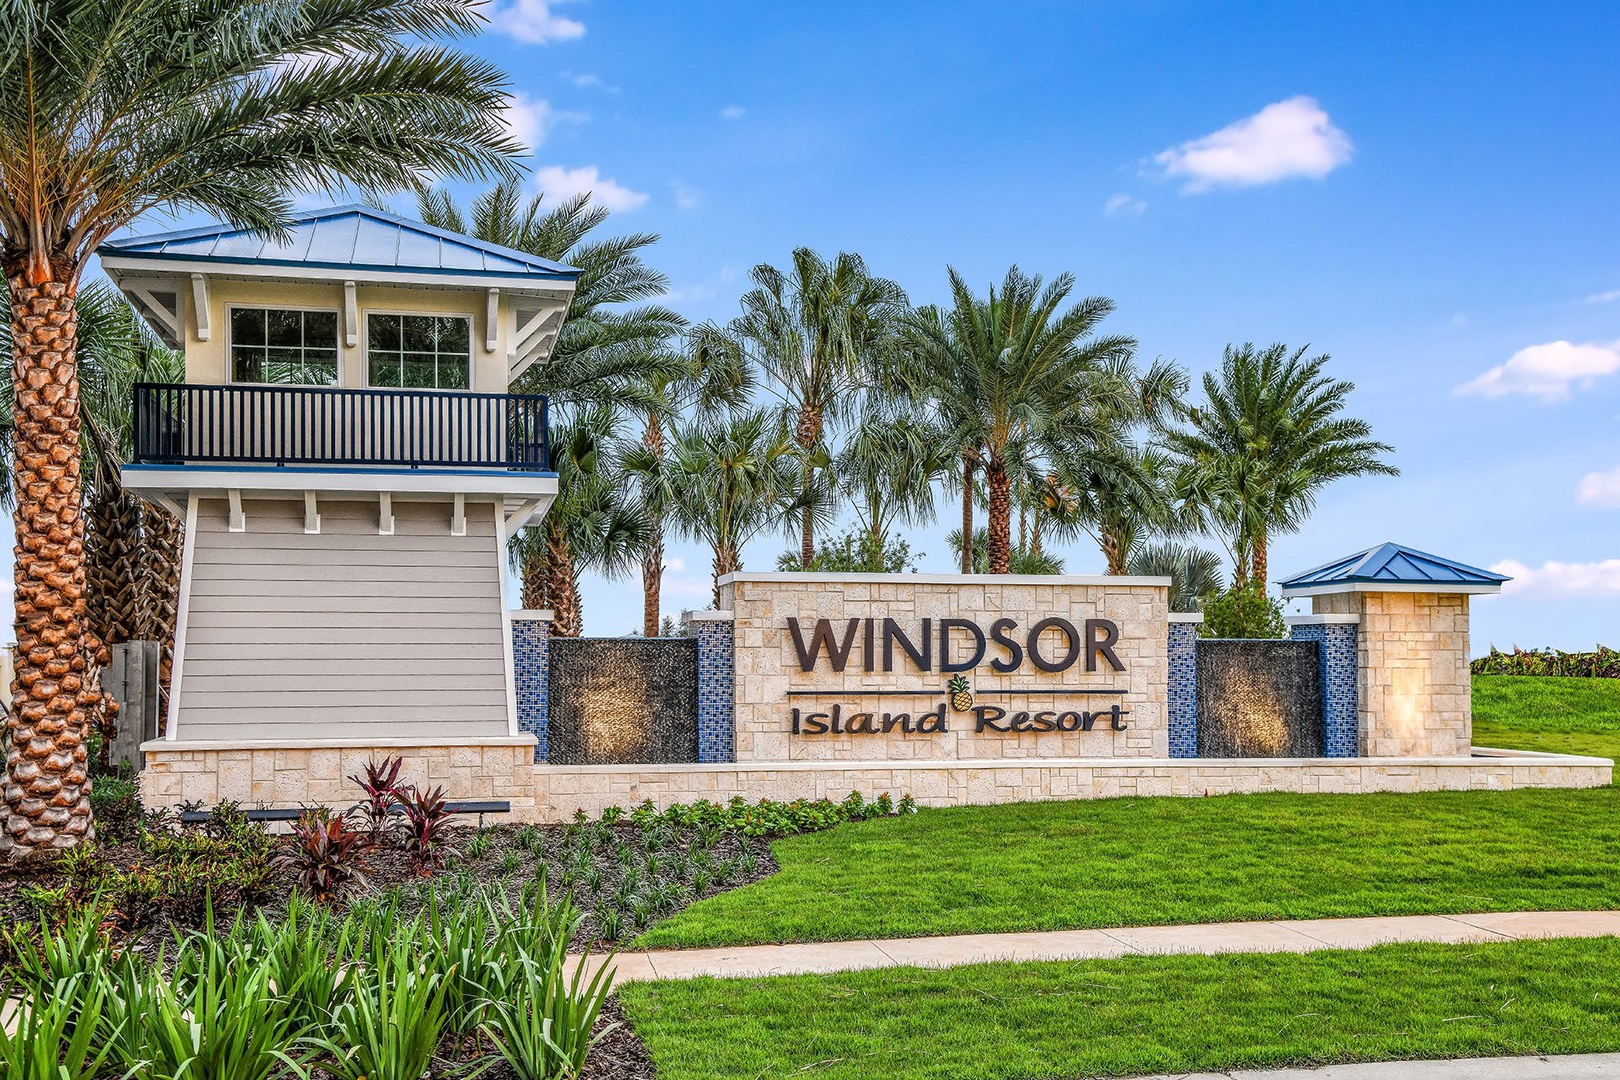 Windsor-Island-Resort-5529-web